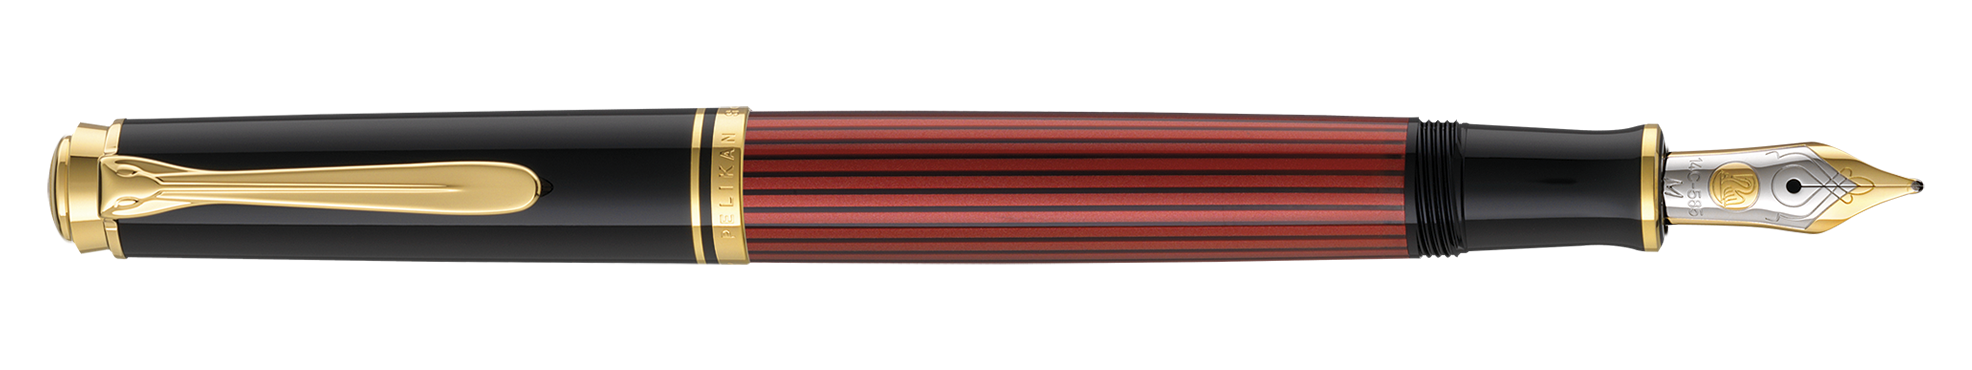 Souverän® 400 Schwarz-Rot